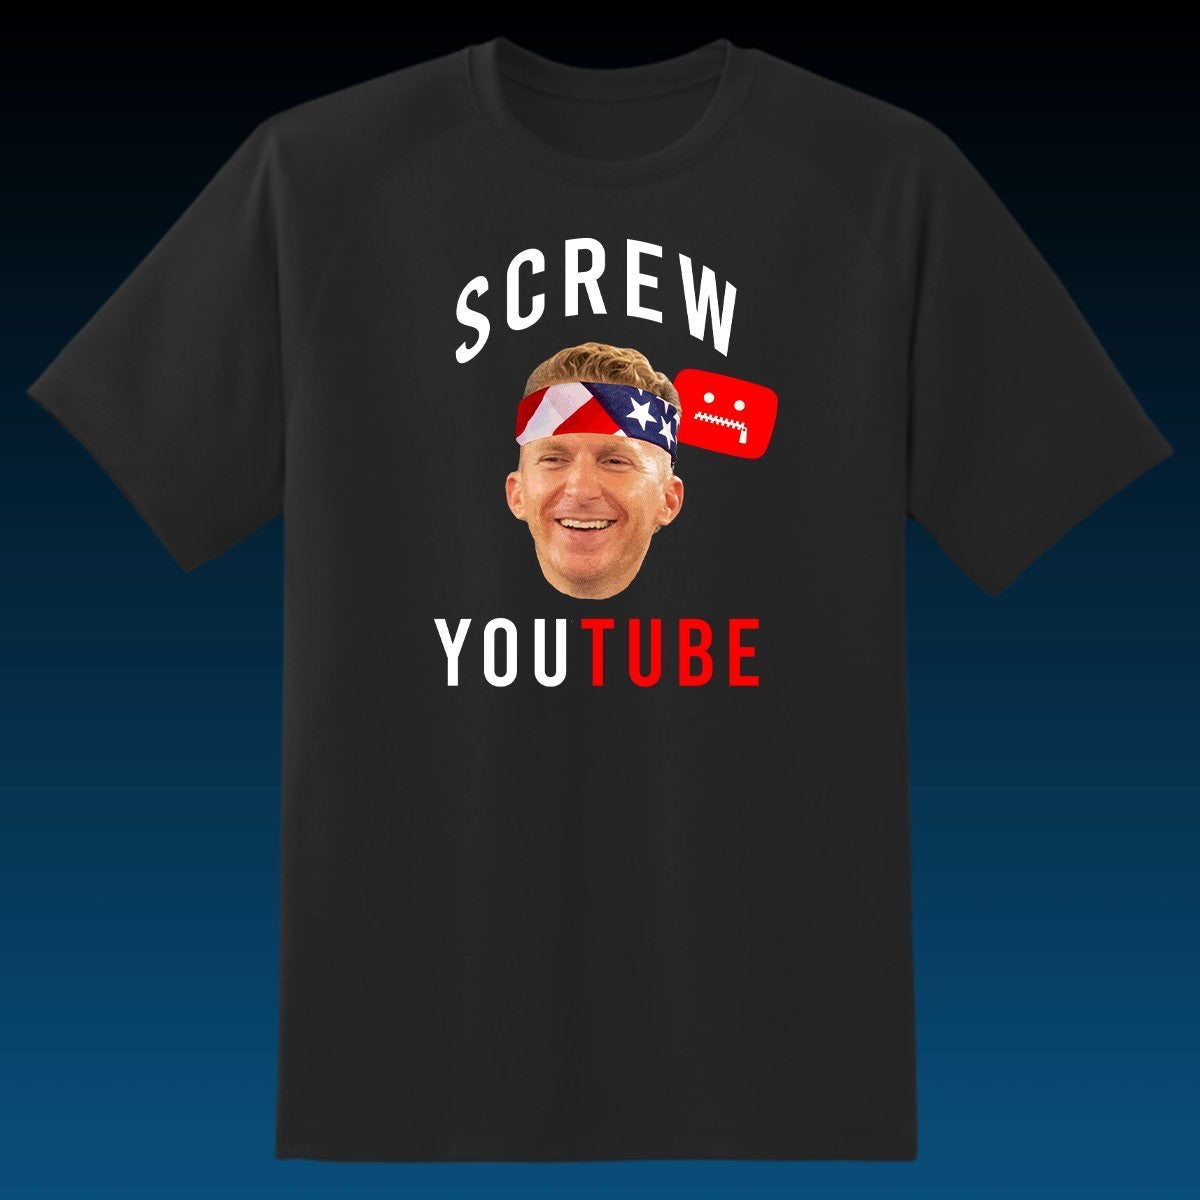 "Screw YouTube" T-Shirt